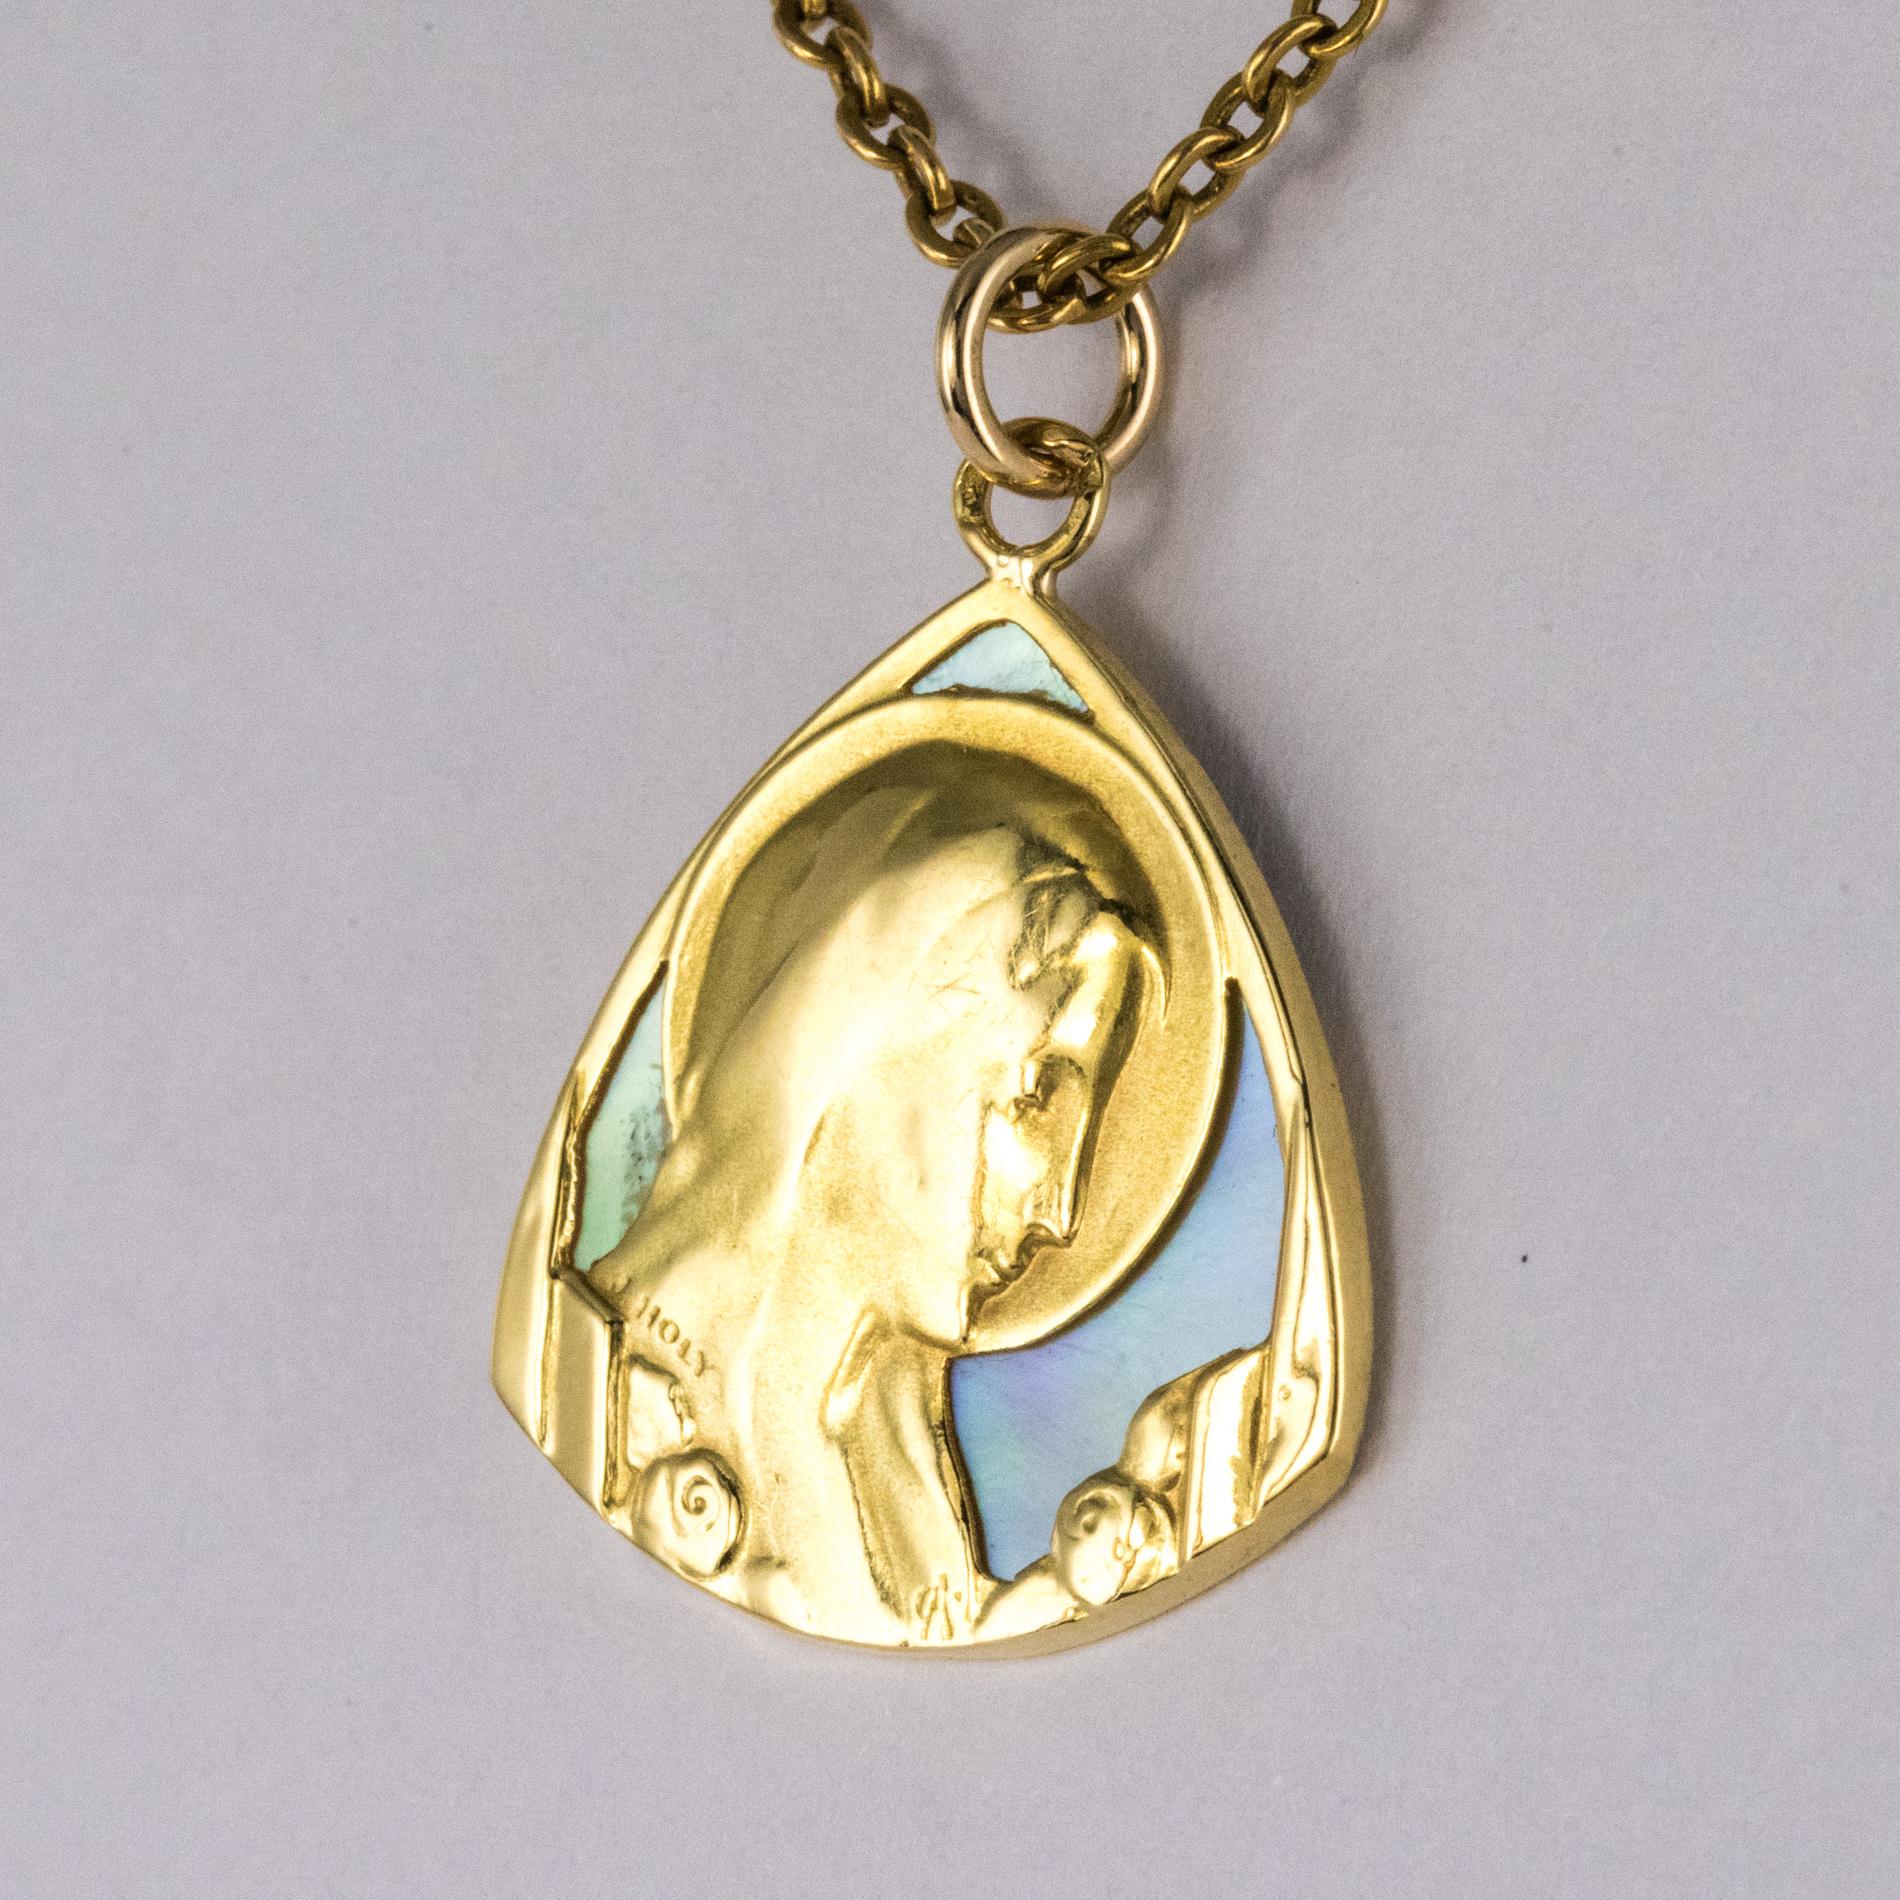 Belle Époque French 1900s 18 Karat Yellow Gold Mother of Pearl Virgin Pendant